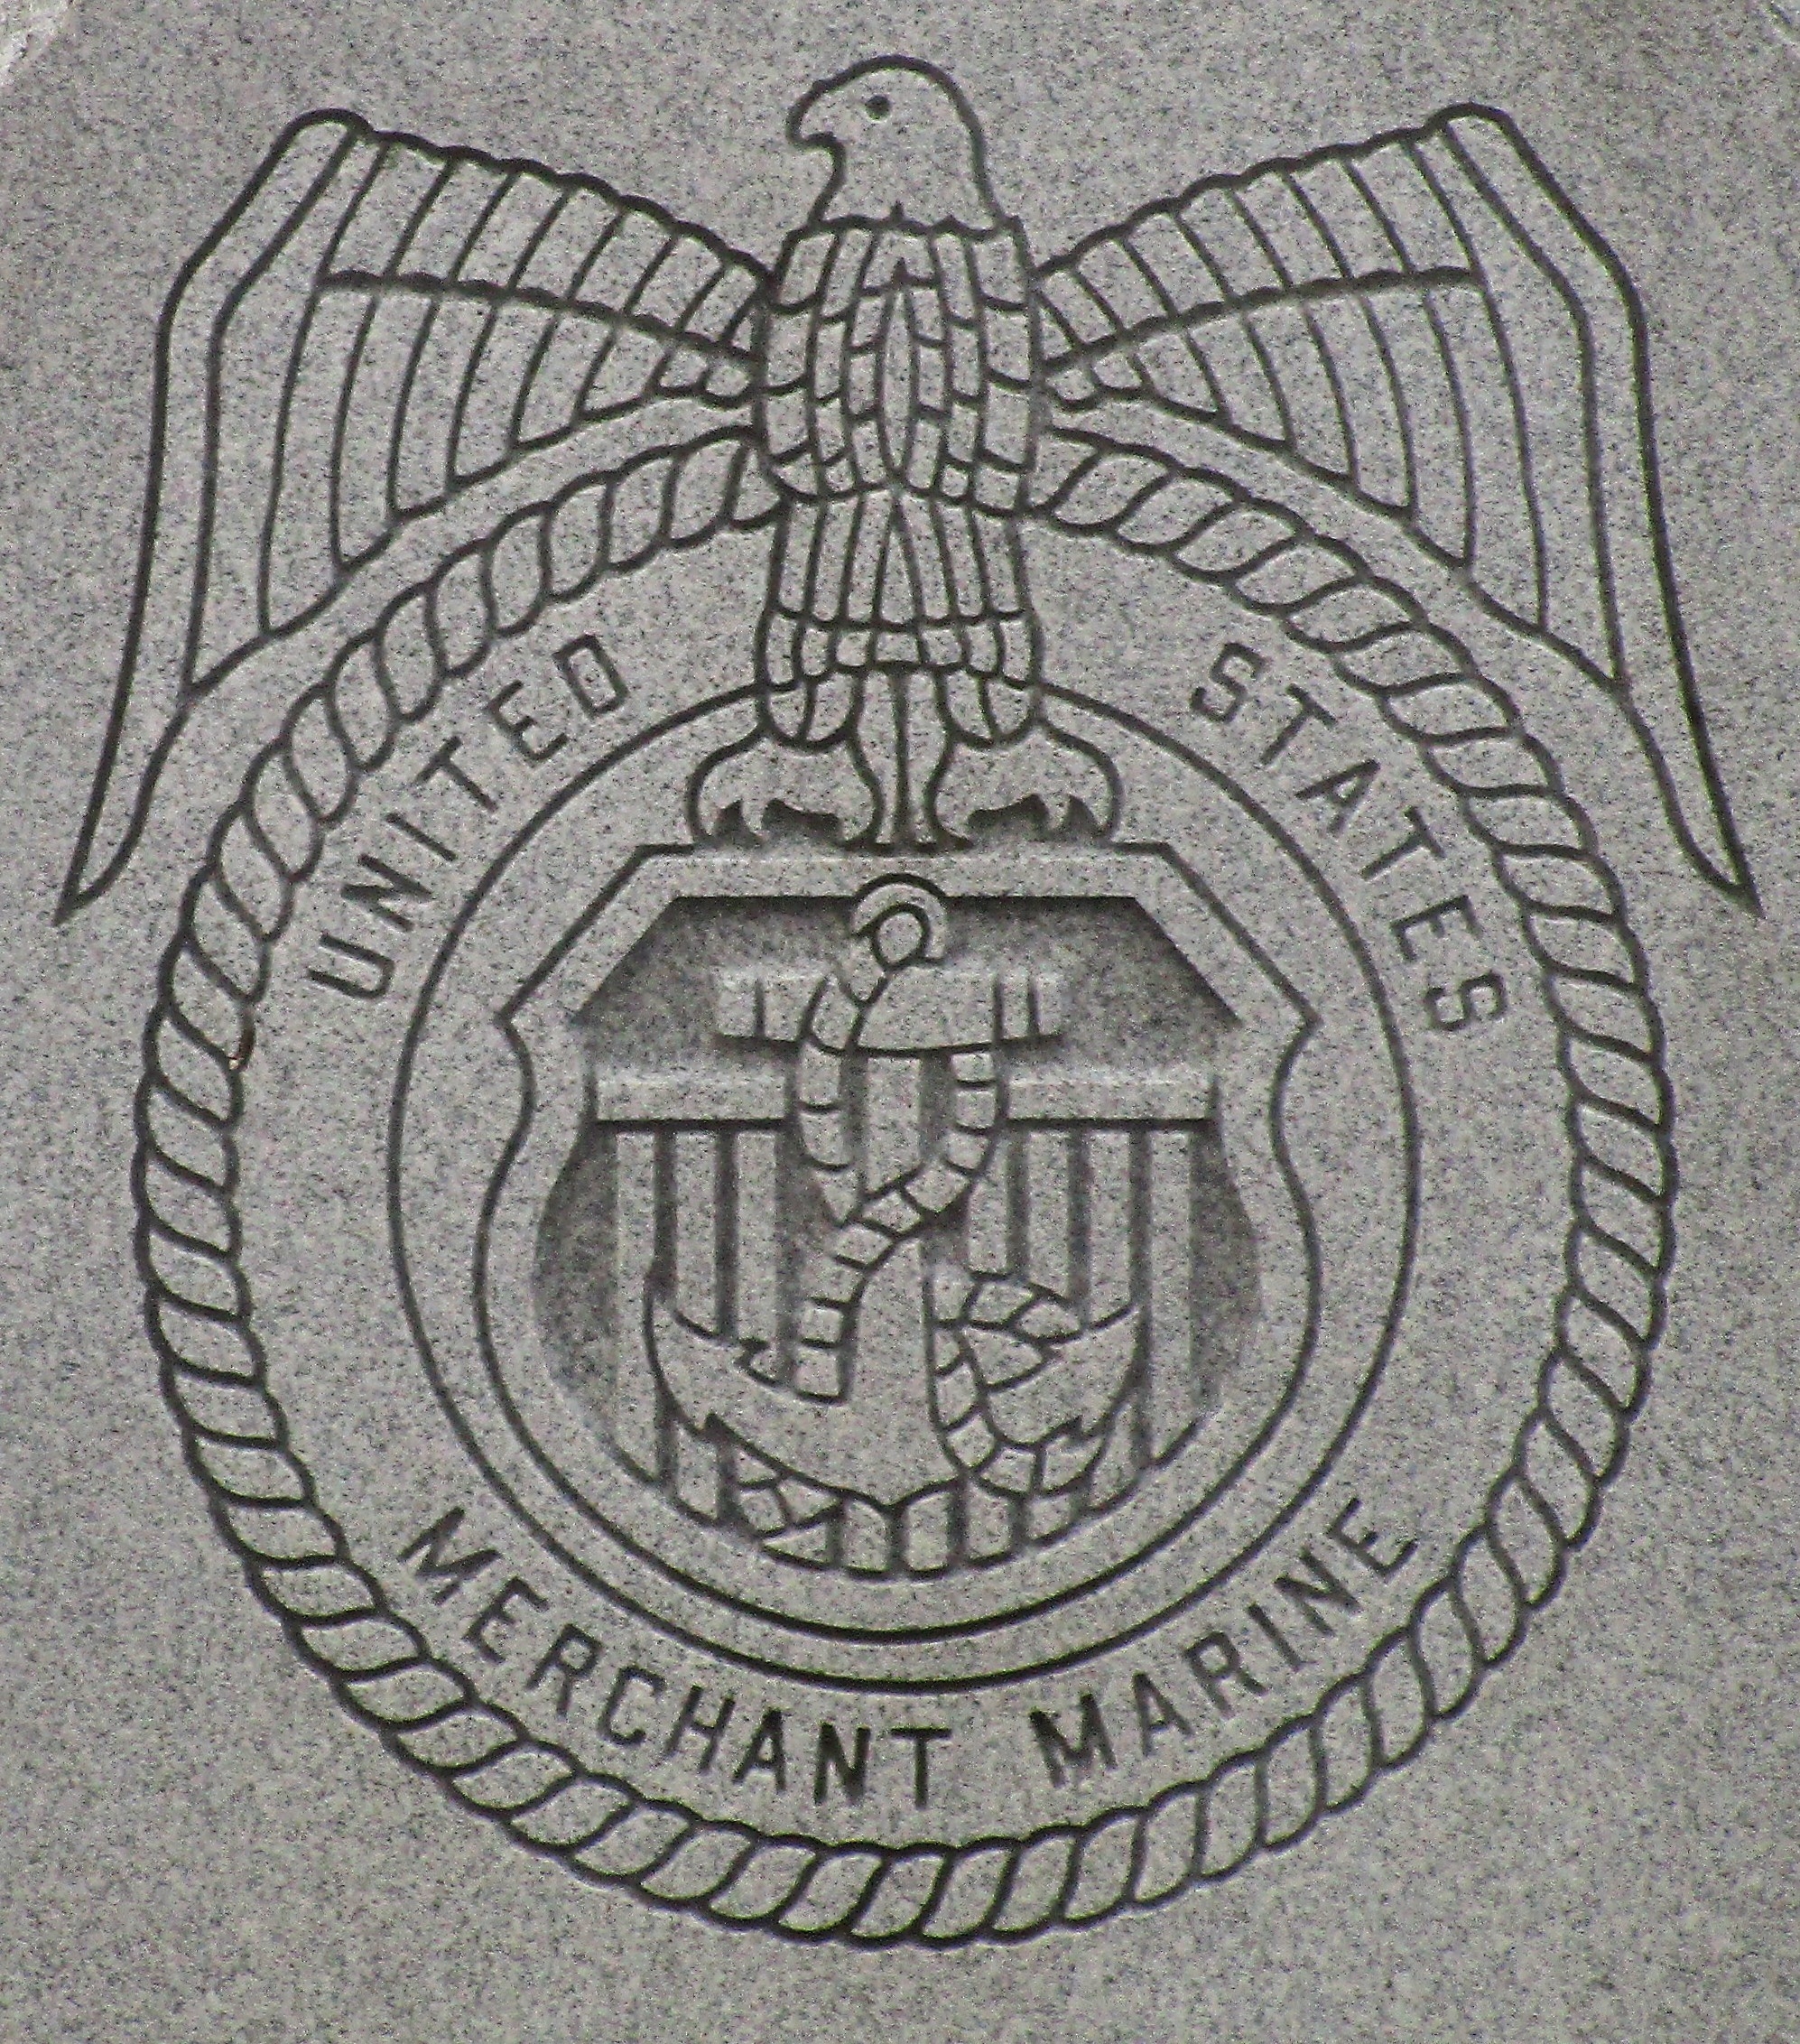 The United States Merchant Marine Marker